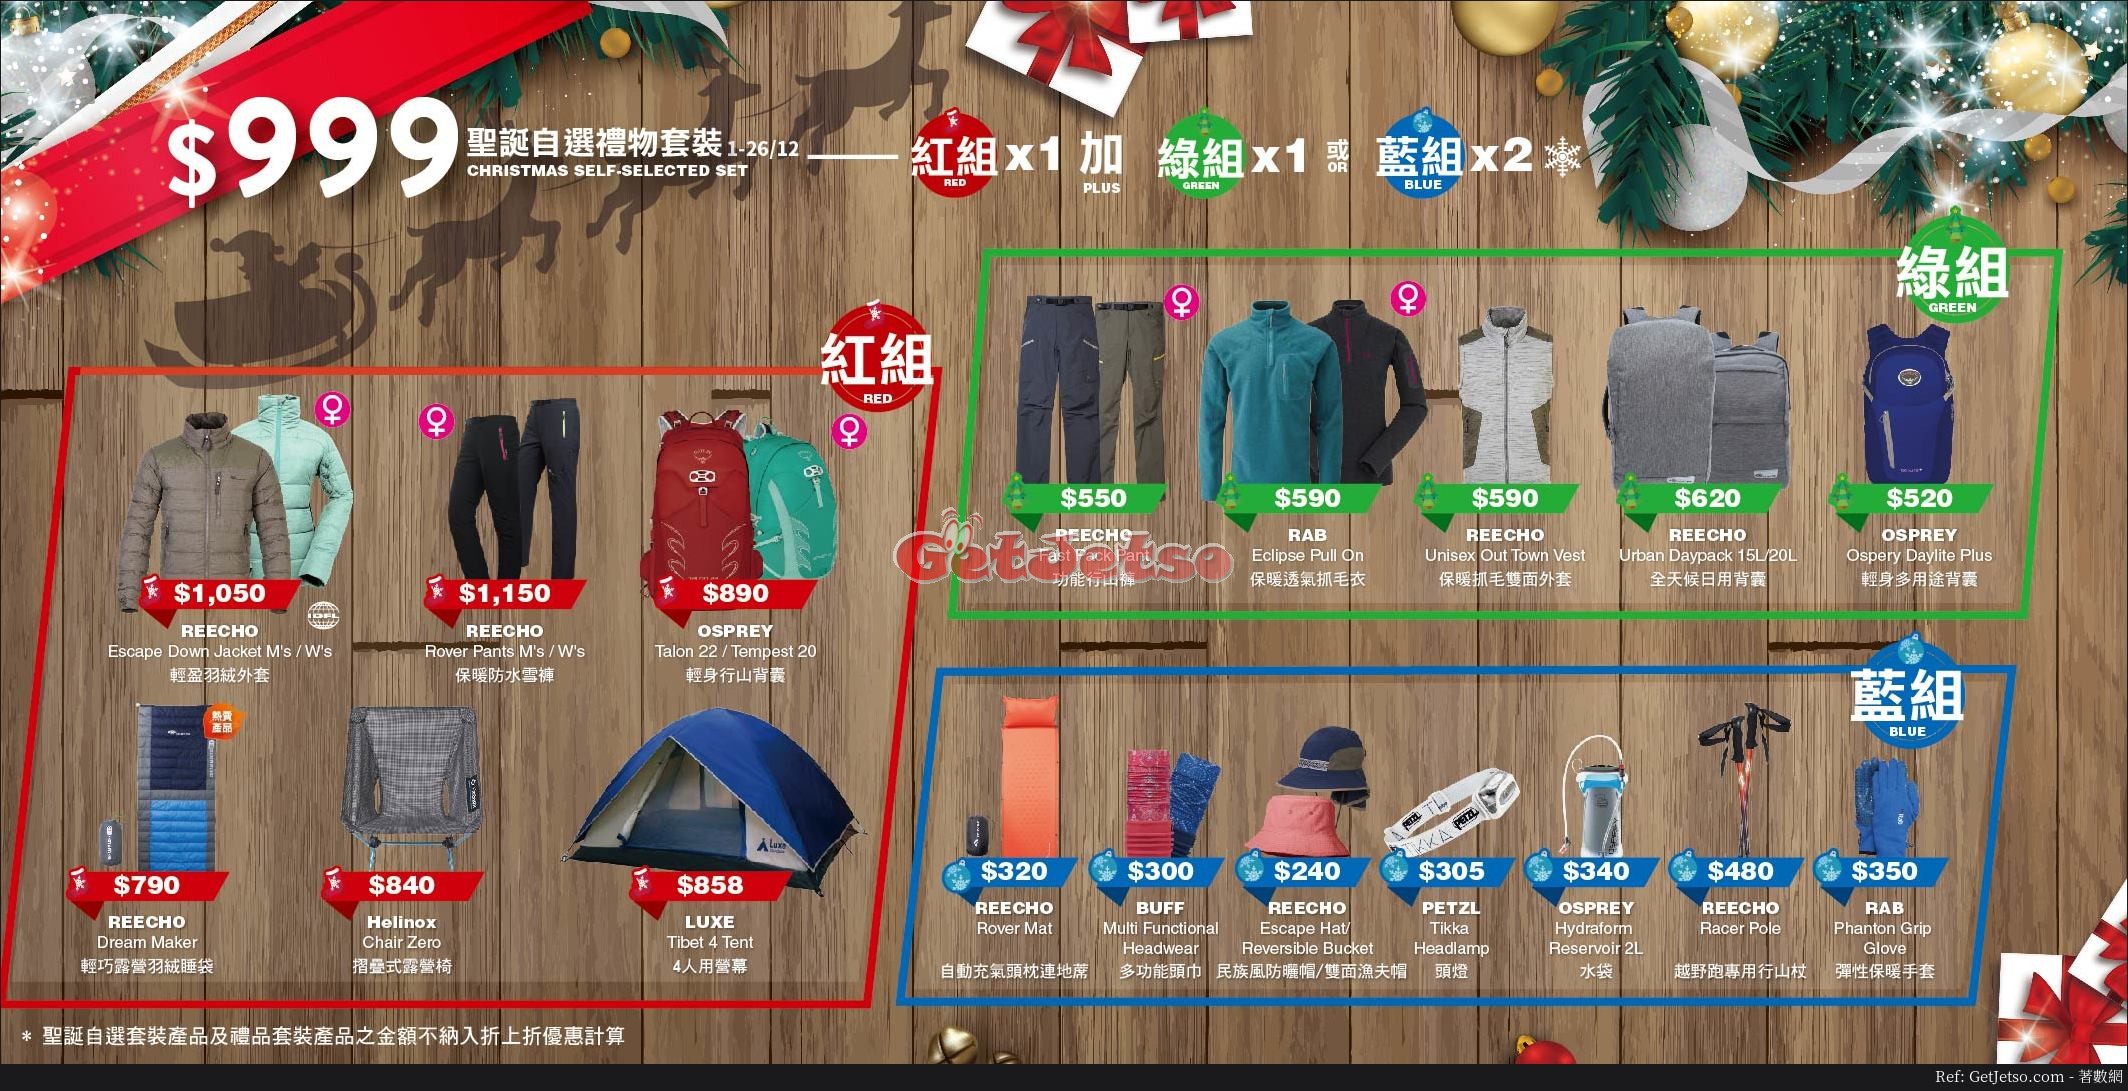 Reecho 專業戶外旅遊裝備聖誕套裝優惠(17年12月1-26日)圖片1